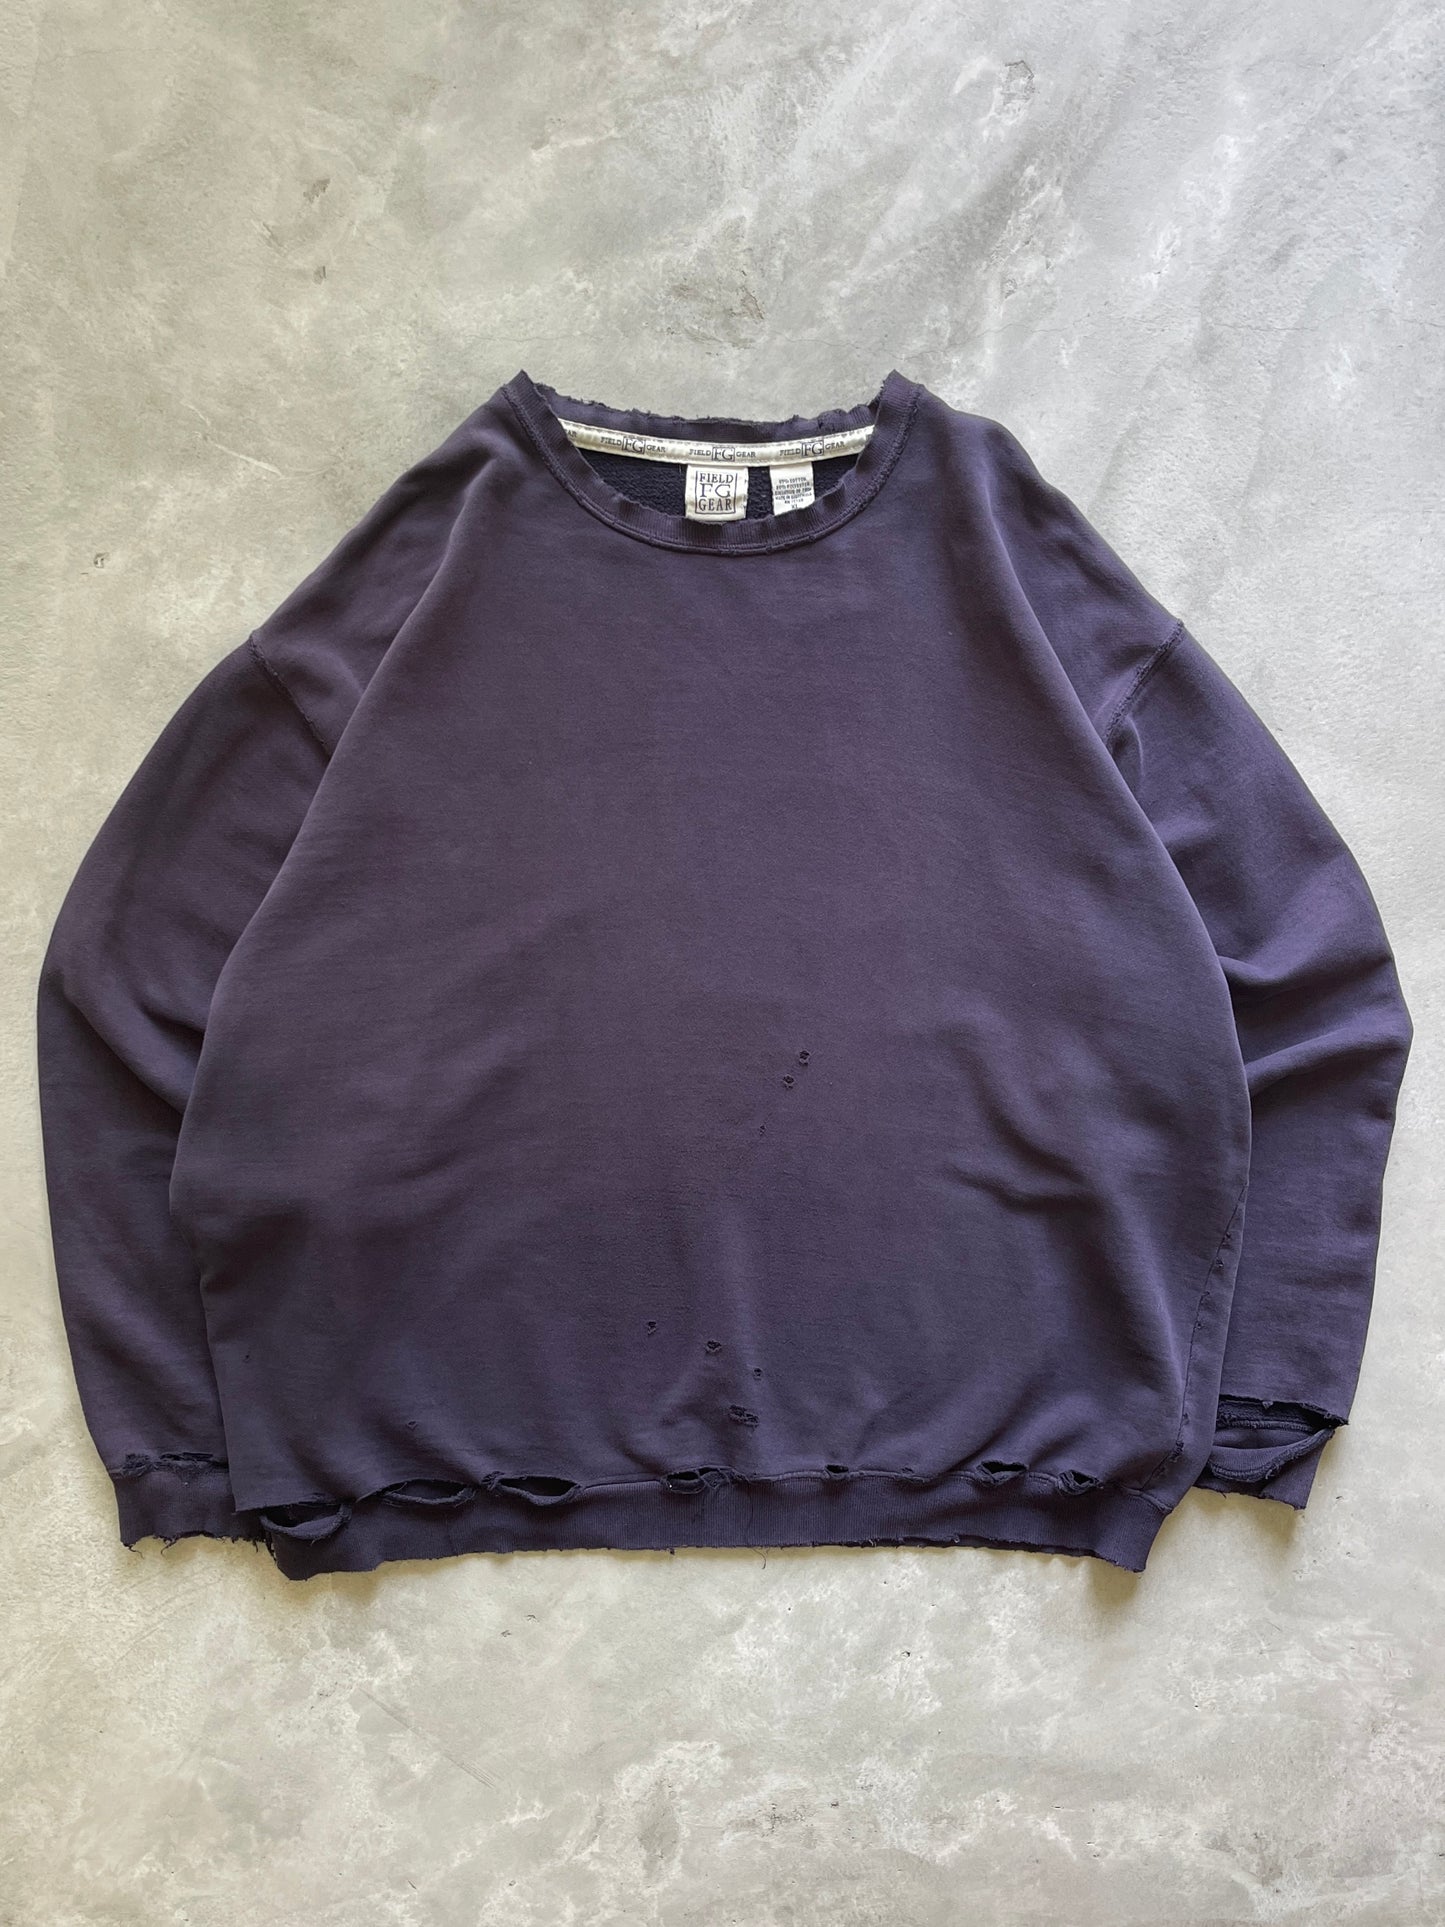 Sun Faded/Thrashed Dark Purple Sweatshirt - 2000s - XL